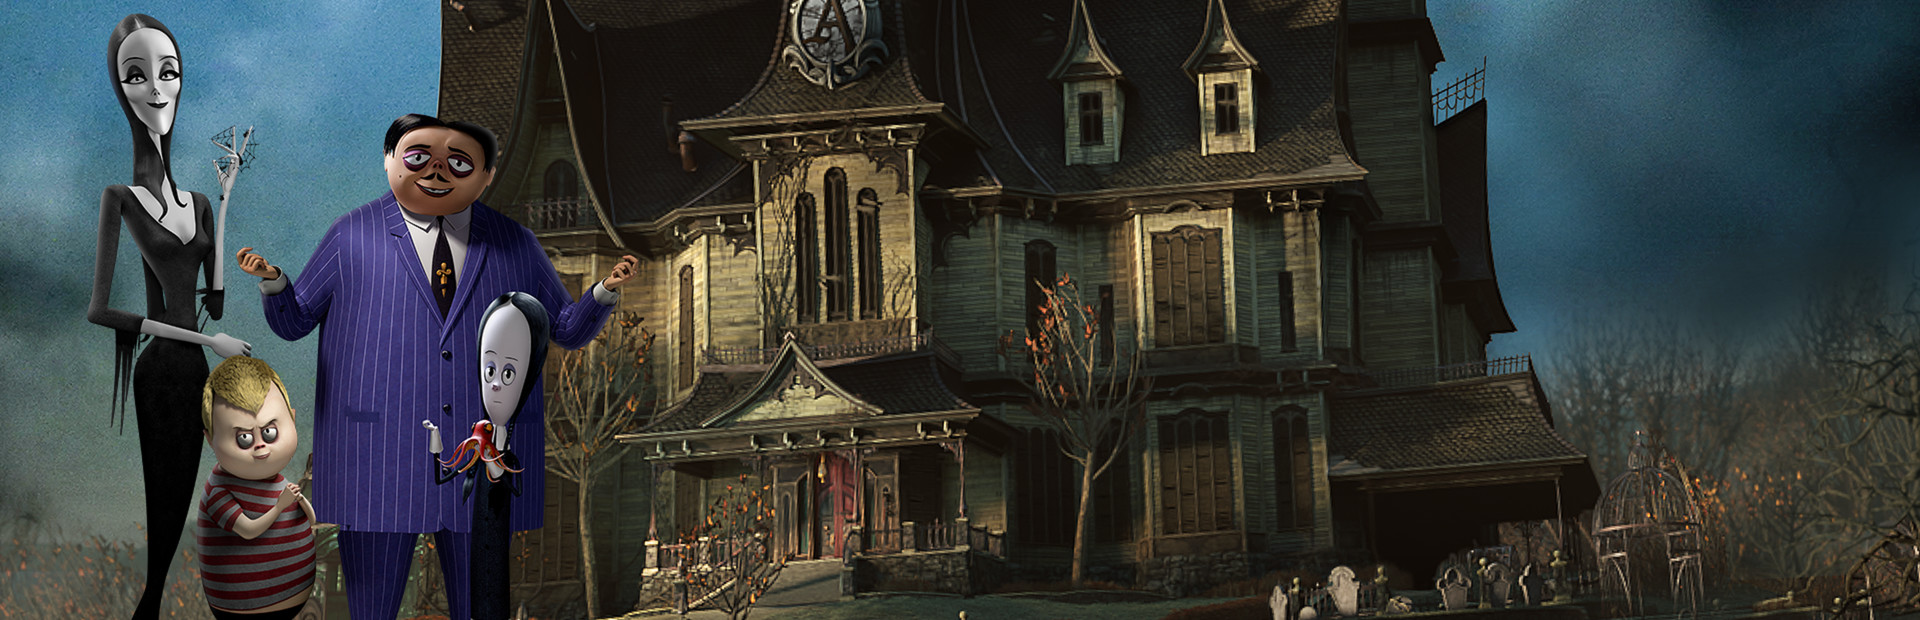 The Addams Family: Mansion Mayhem cover image